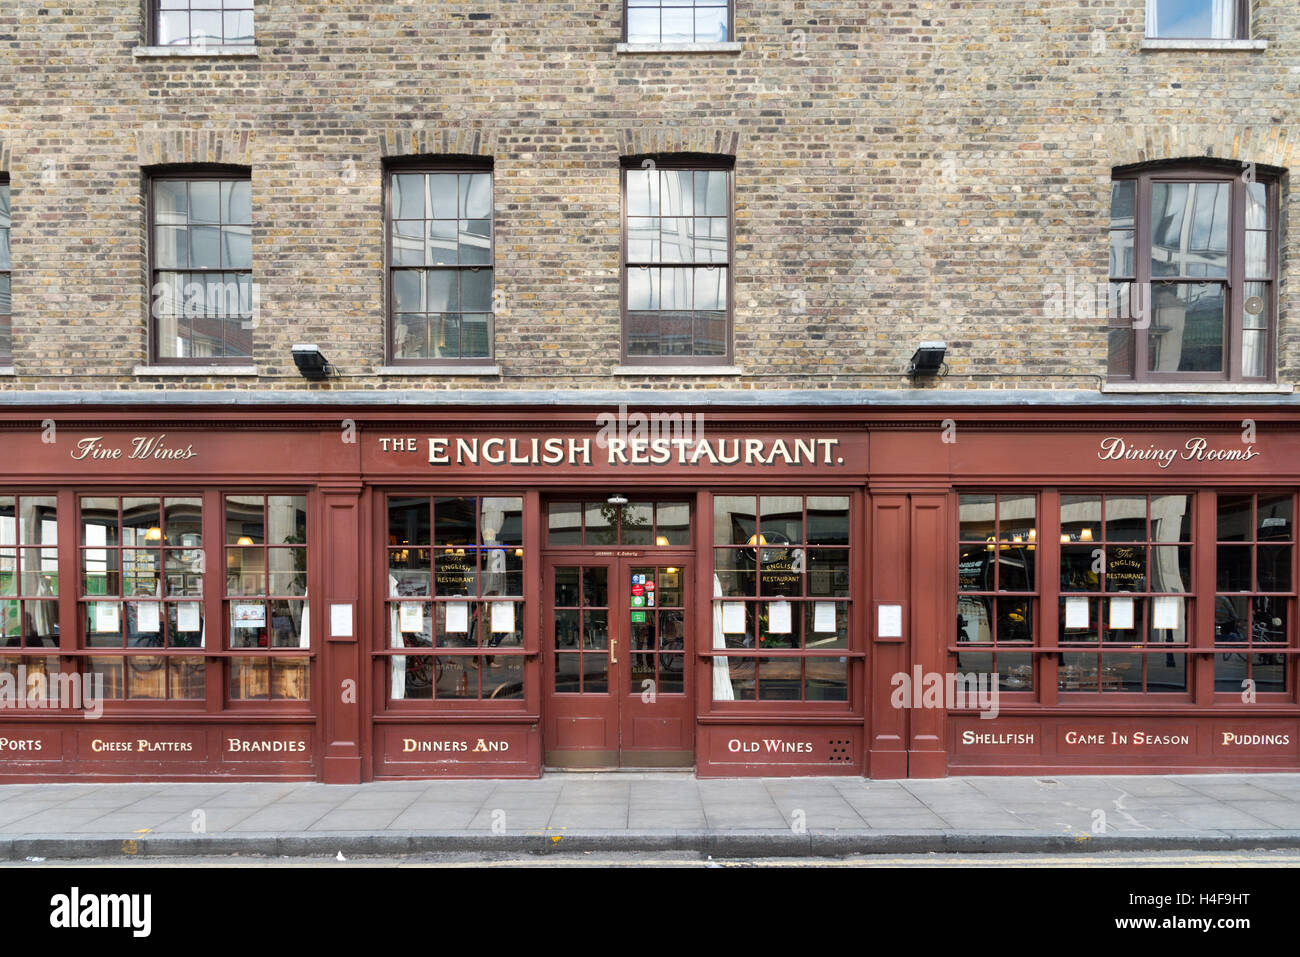 Le restaurant anglais, Brushfield Street, Spitalfields, Londres, Angleterre, Royaume-Uni Banque D'Images